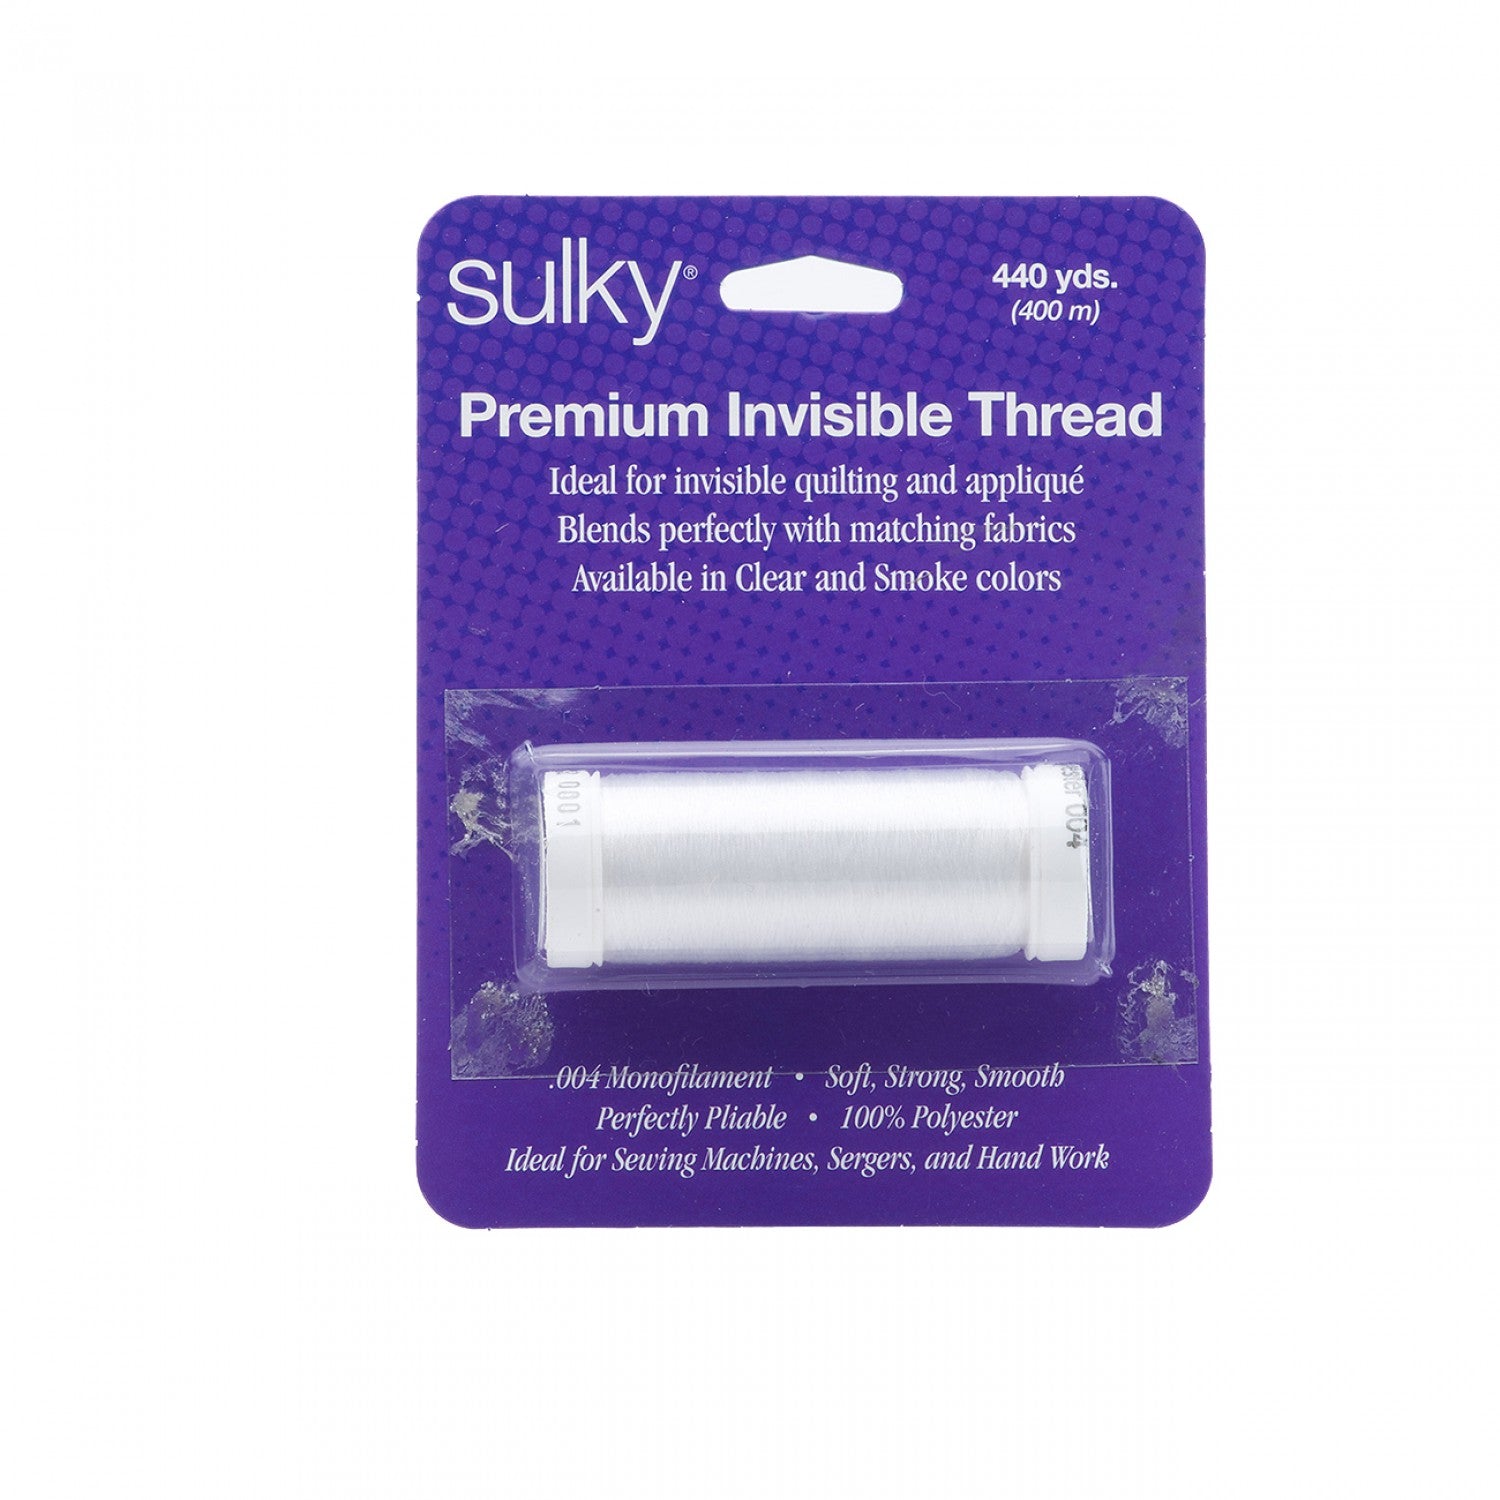 Sulky Premium Invisible Thread 440yd Clear